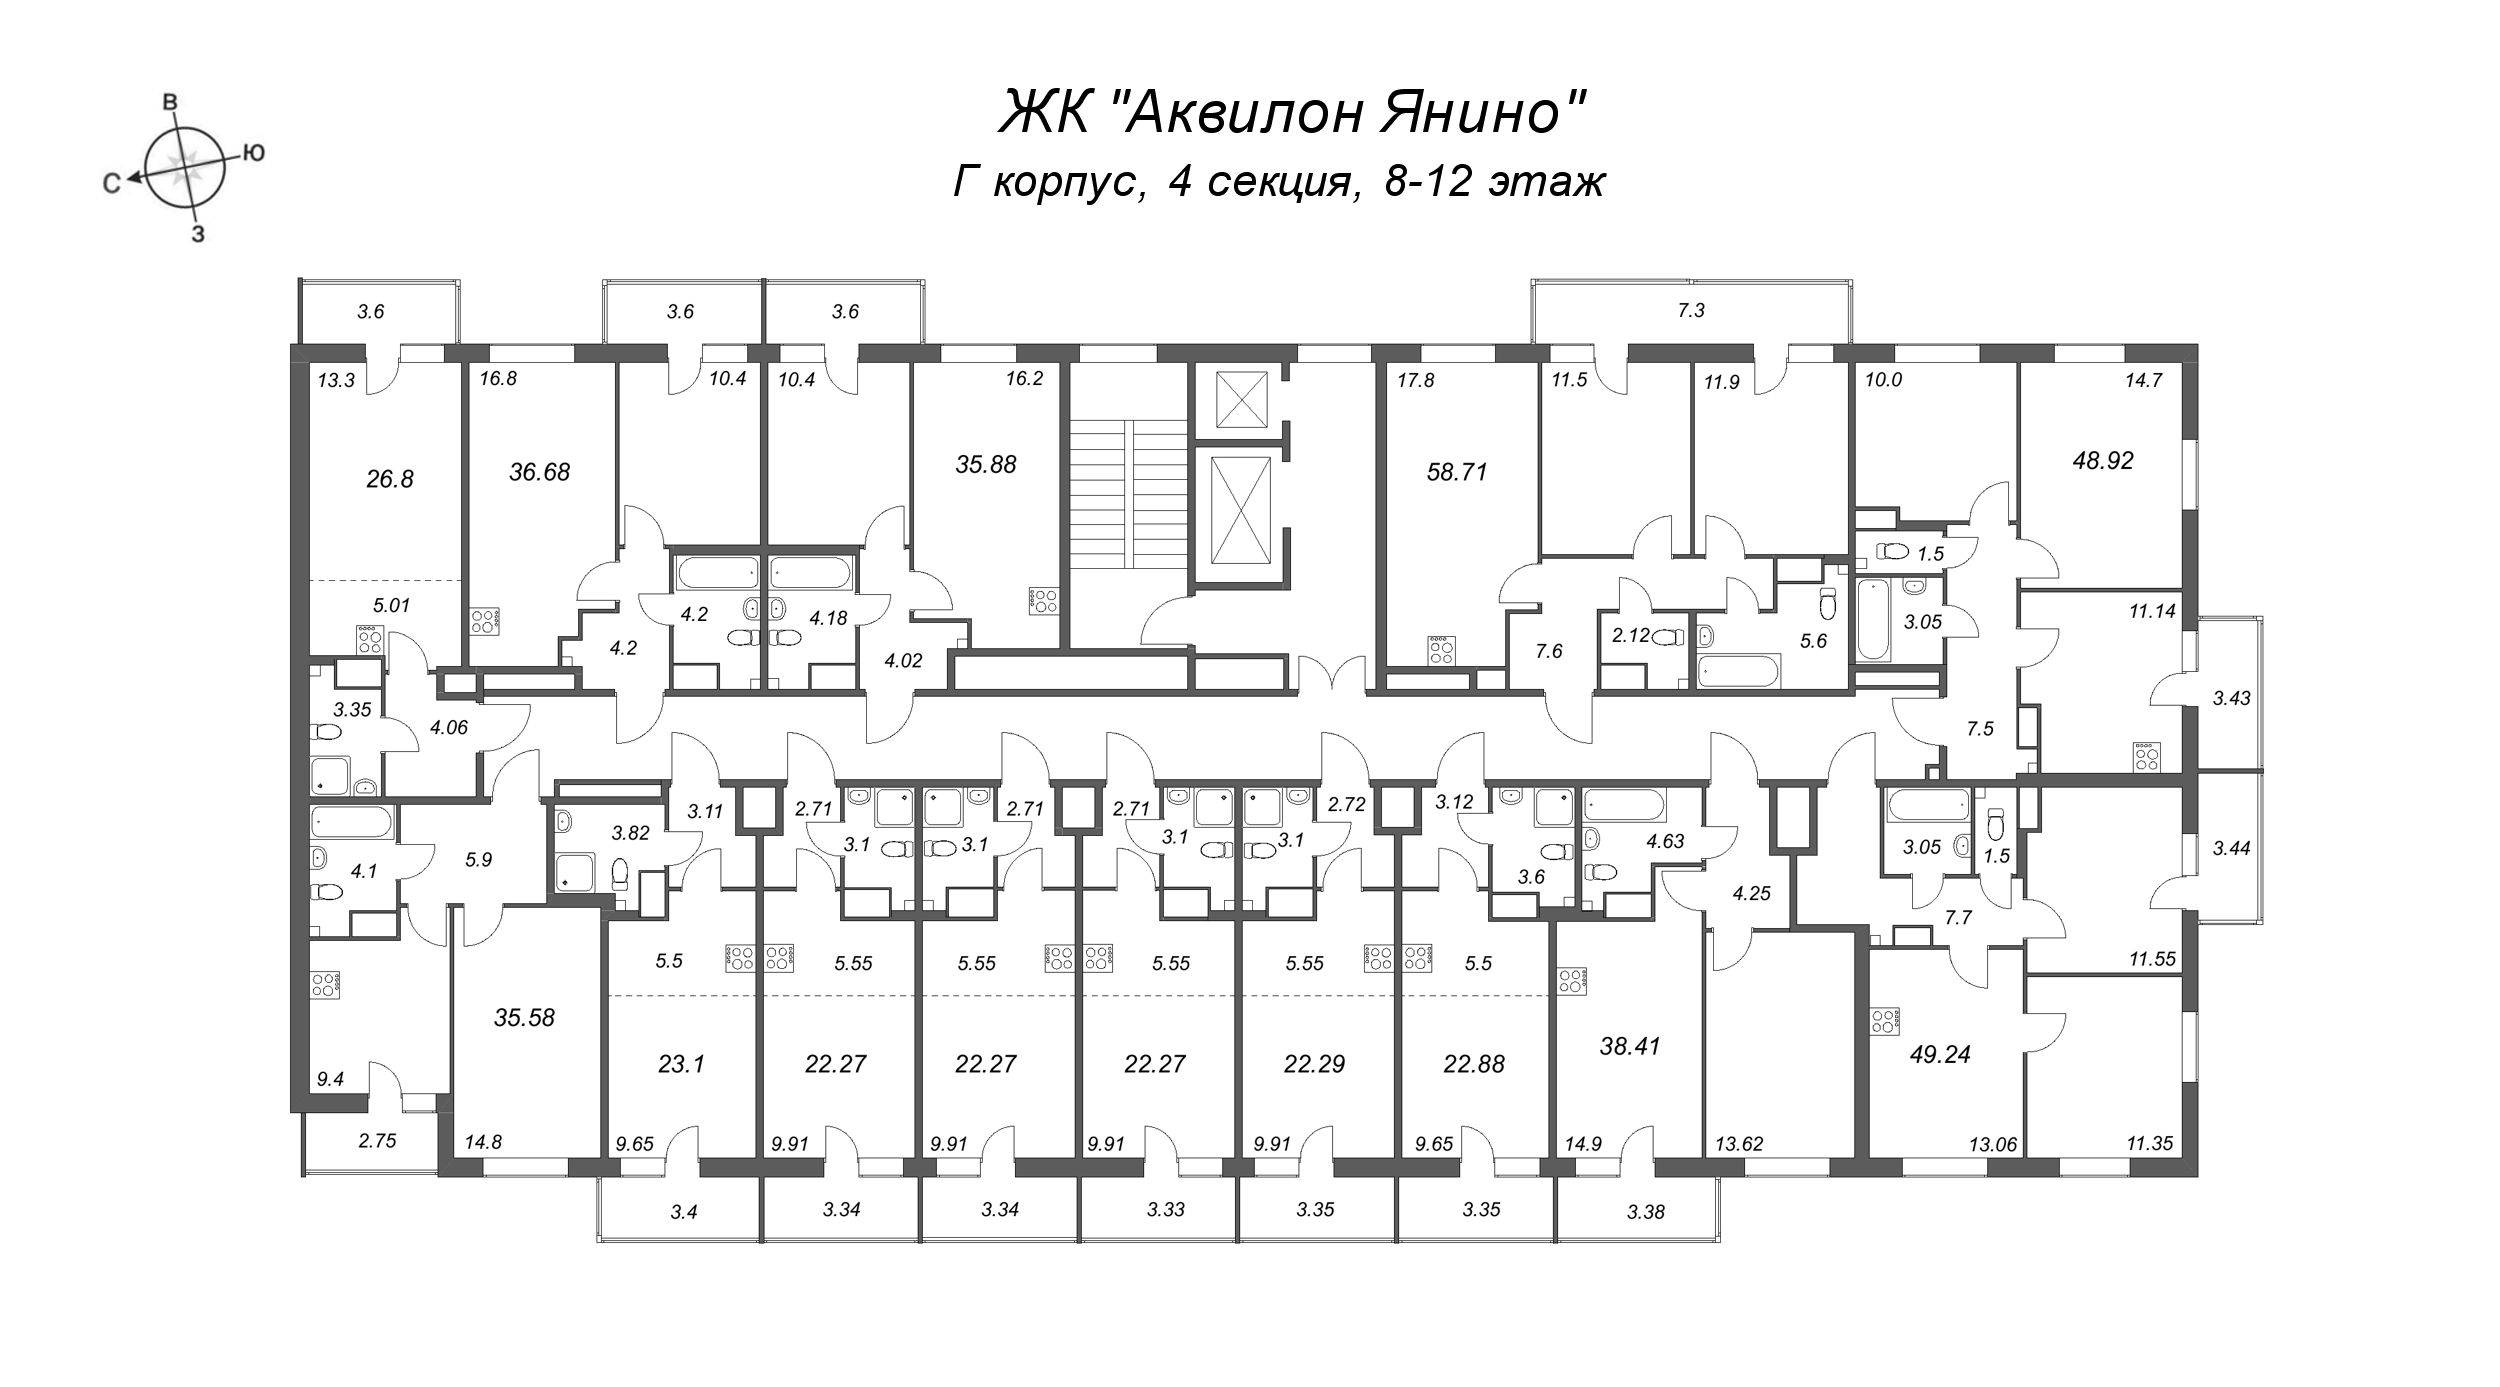 1-комнатная квартира, 35.58 м² в ЖК "Аквилон Янино" - планировка этажа